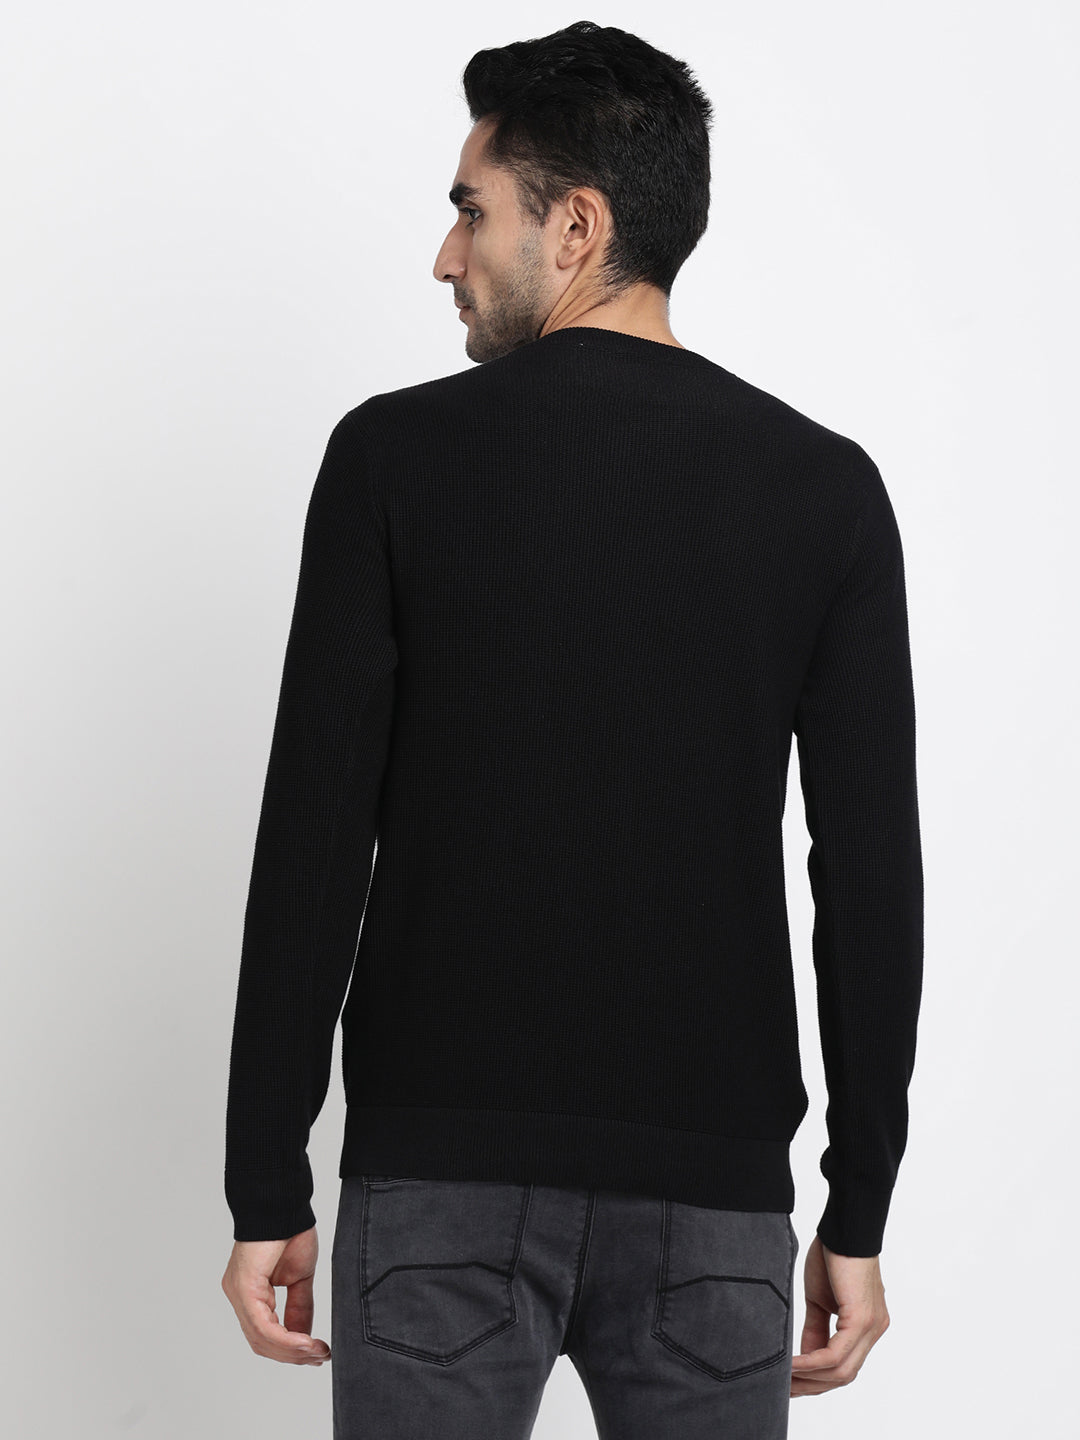 Knitted Black Plain Regular Fit Full Sleeve Casual Pull Over